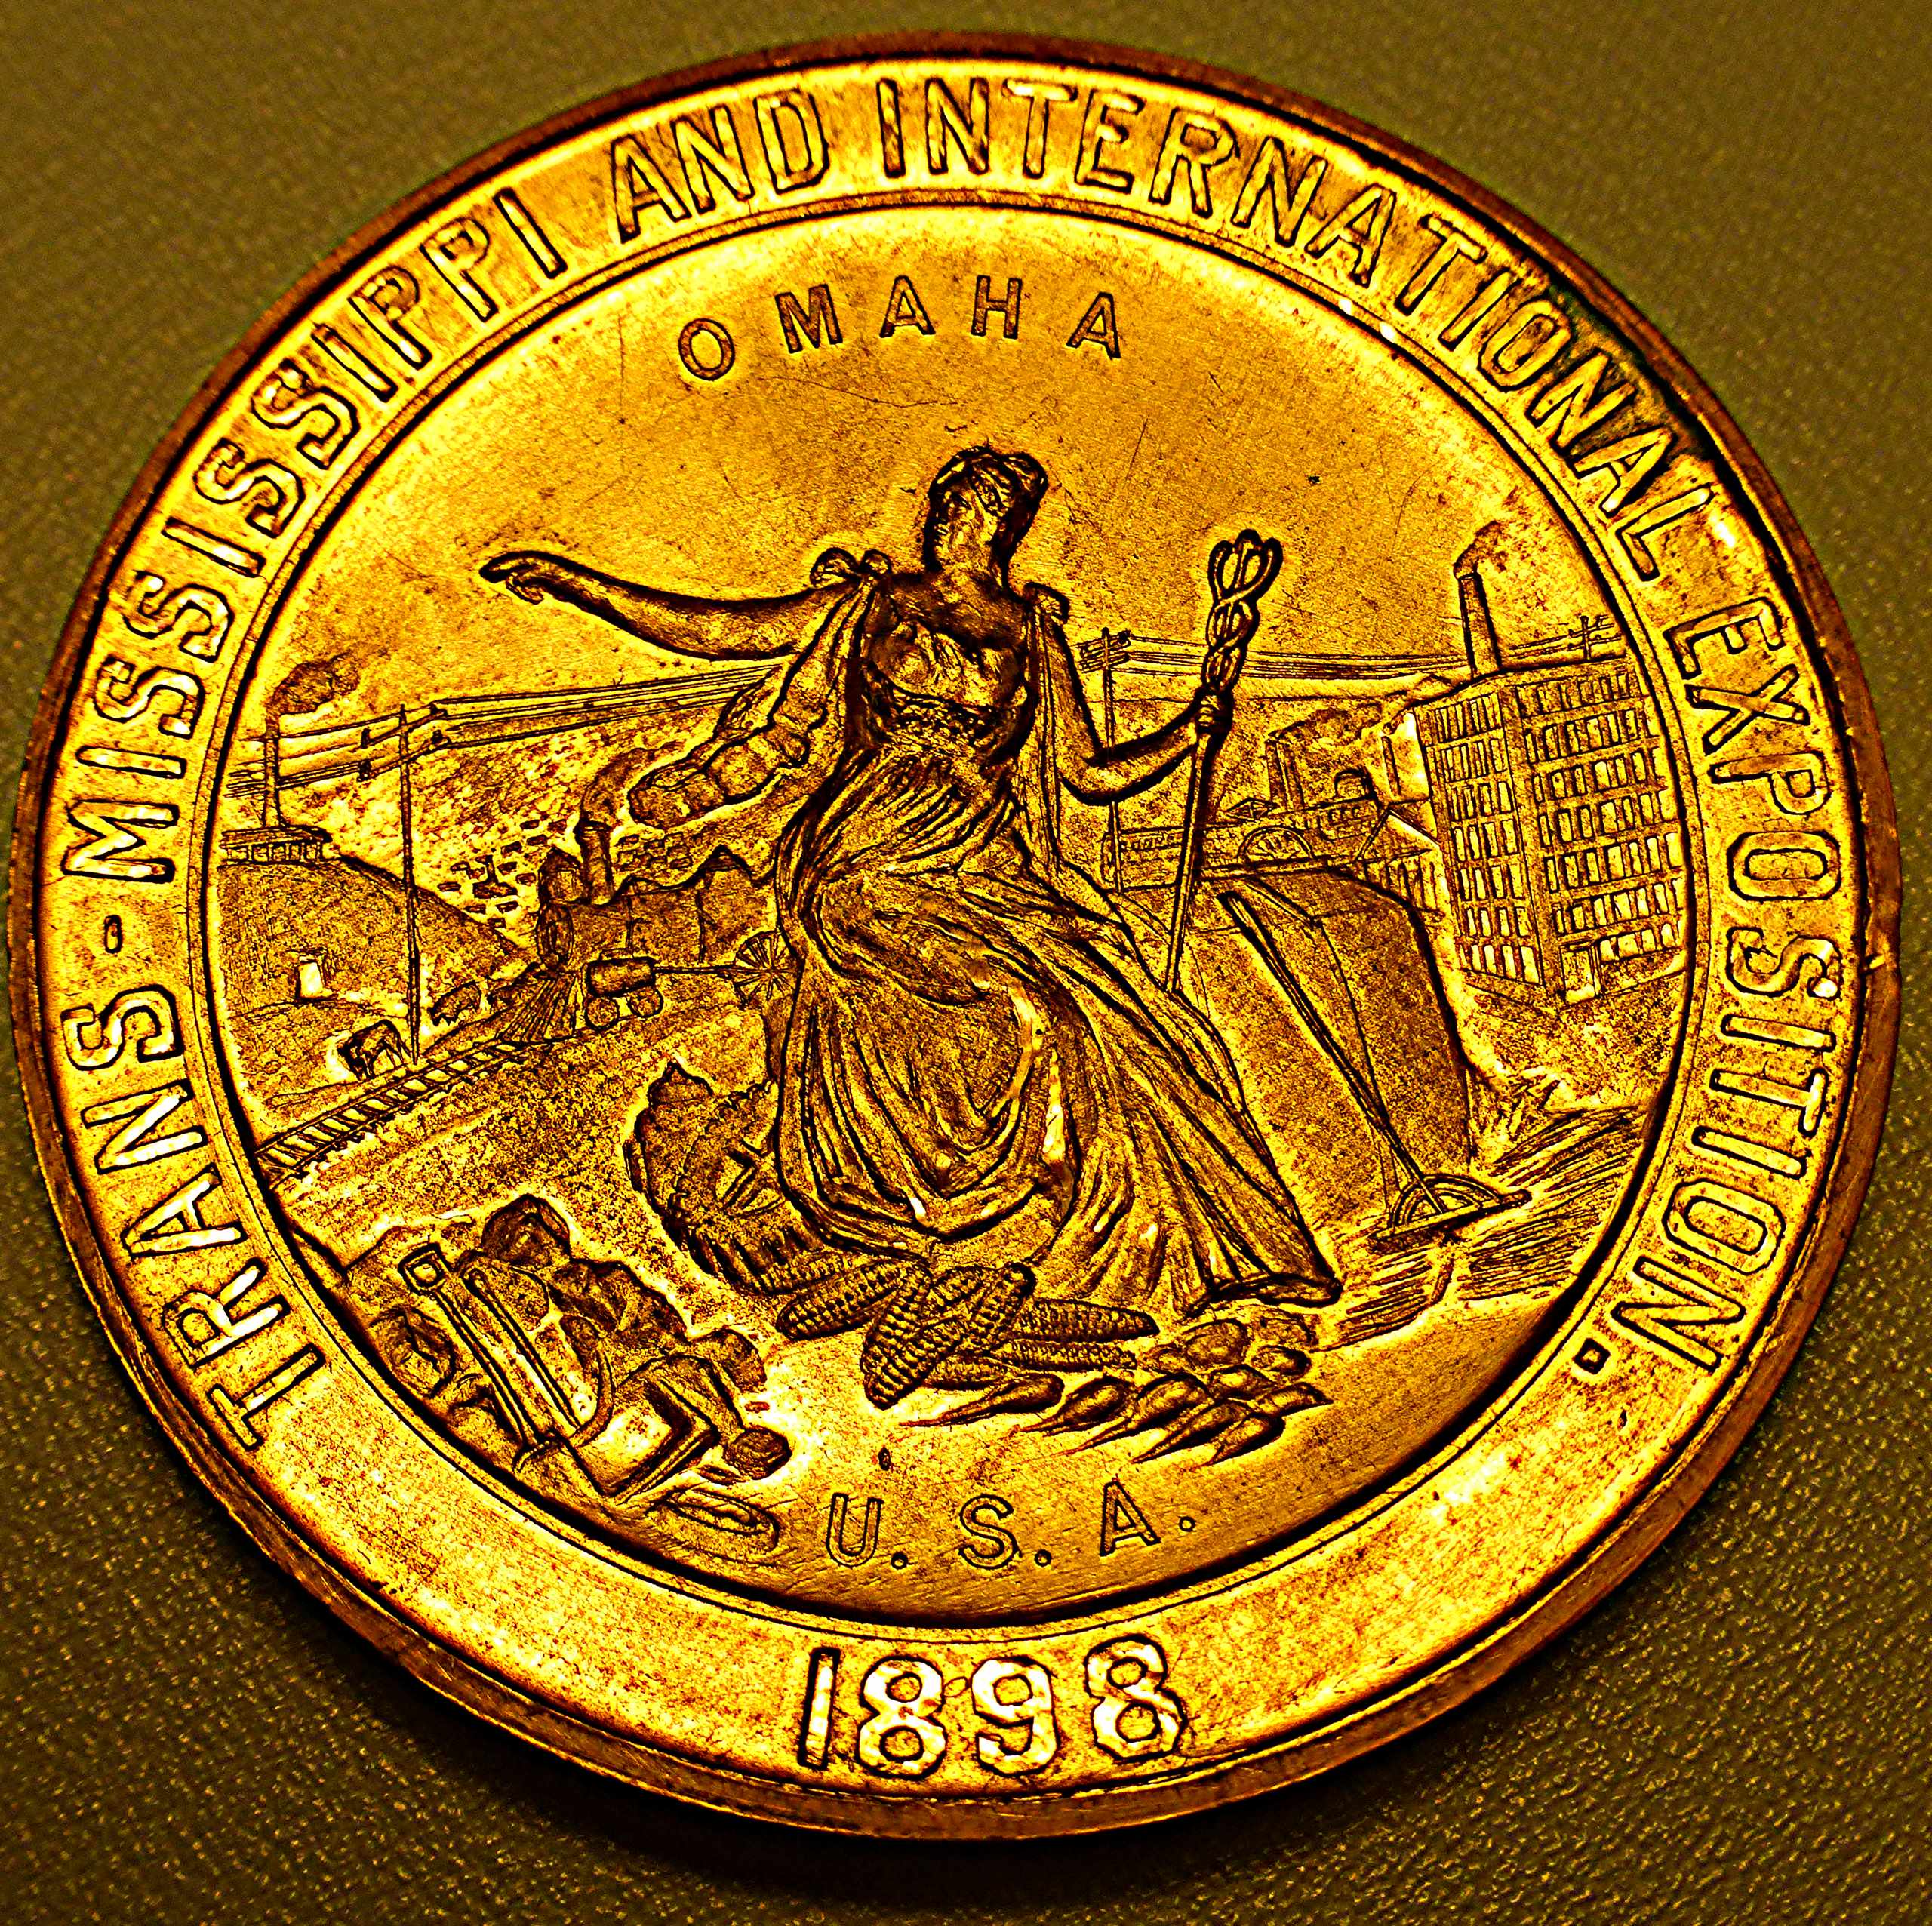 Medals of 1898 Trans Mississippi & International Exposition of Omaha